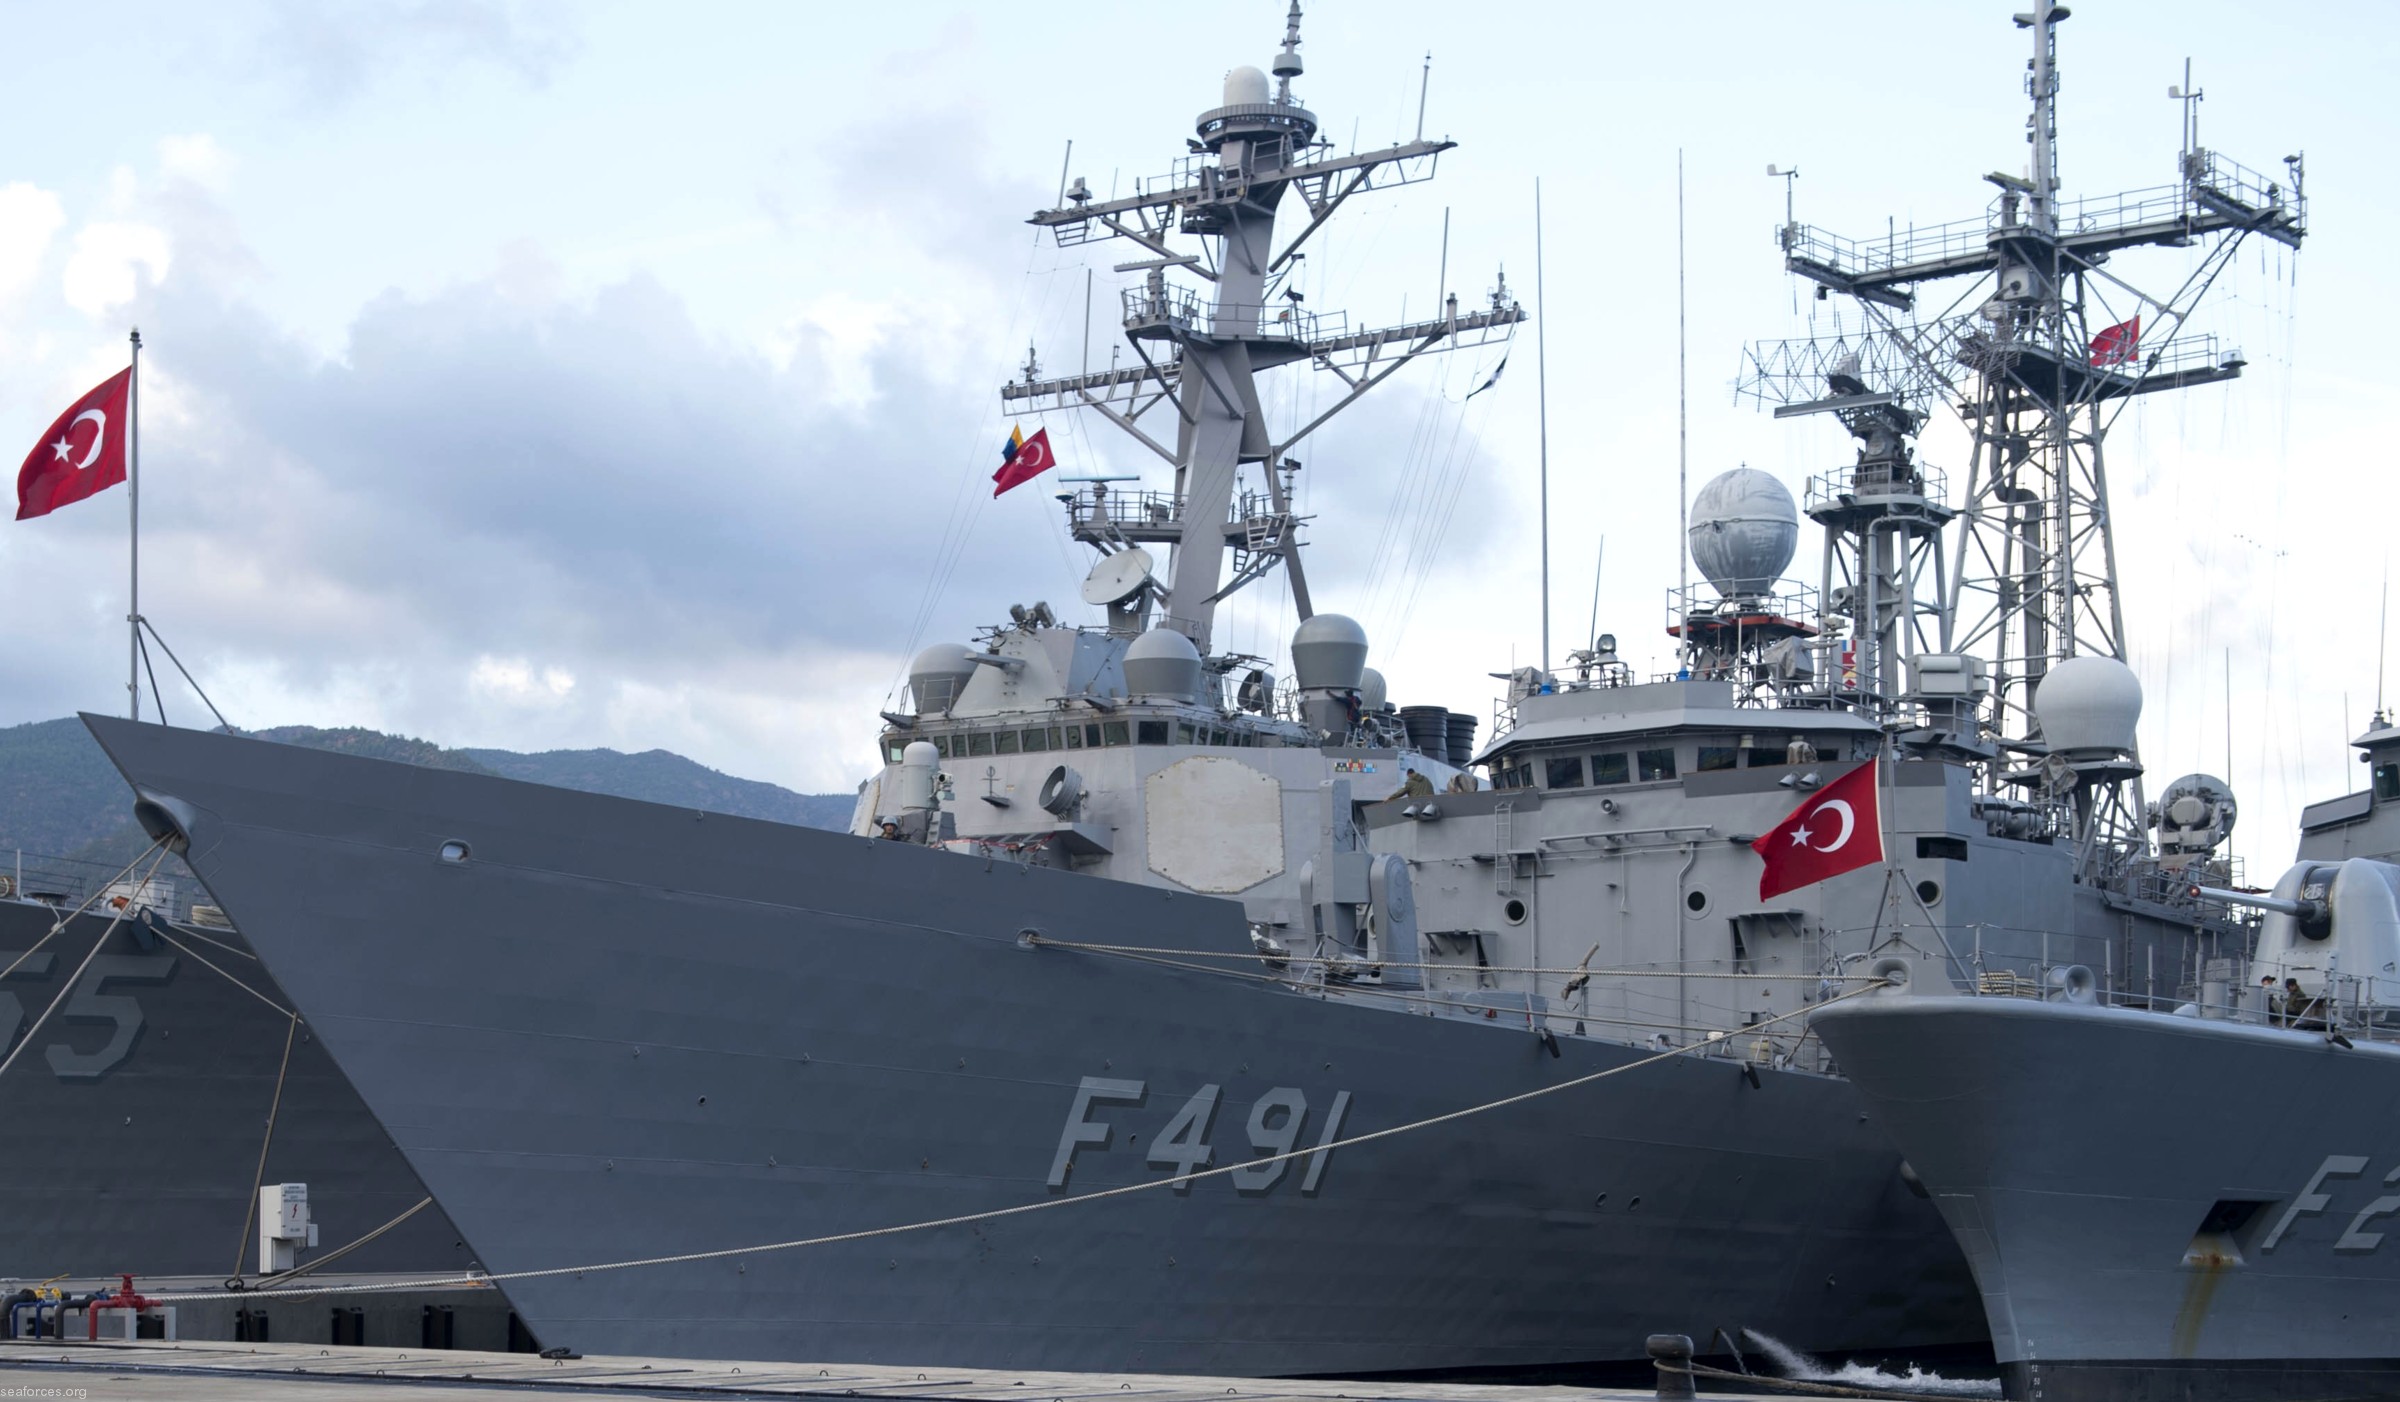 f-491 tcg giresun gabya g-class perry frigate ffg turkish navy türk deniz kuvvetleri 04 nato snmg